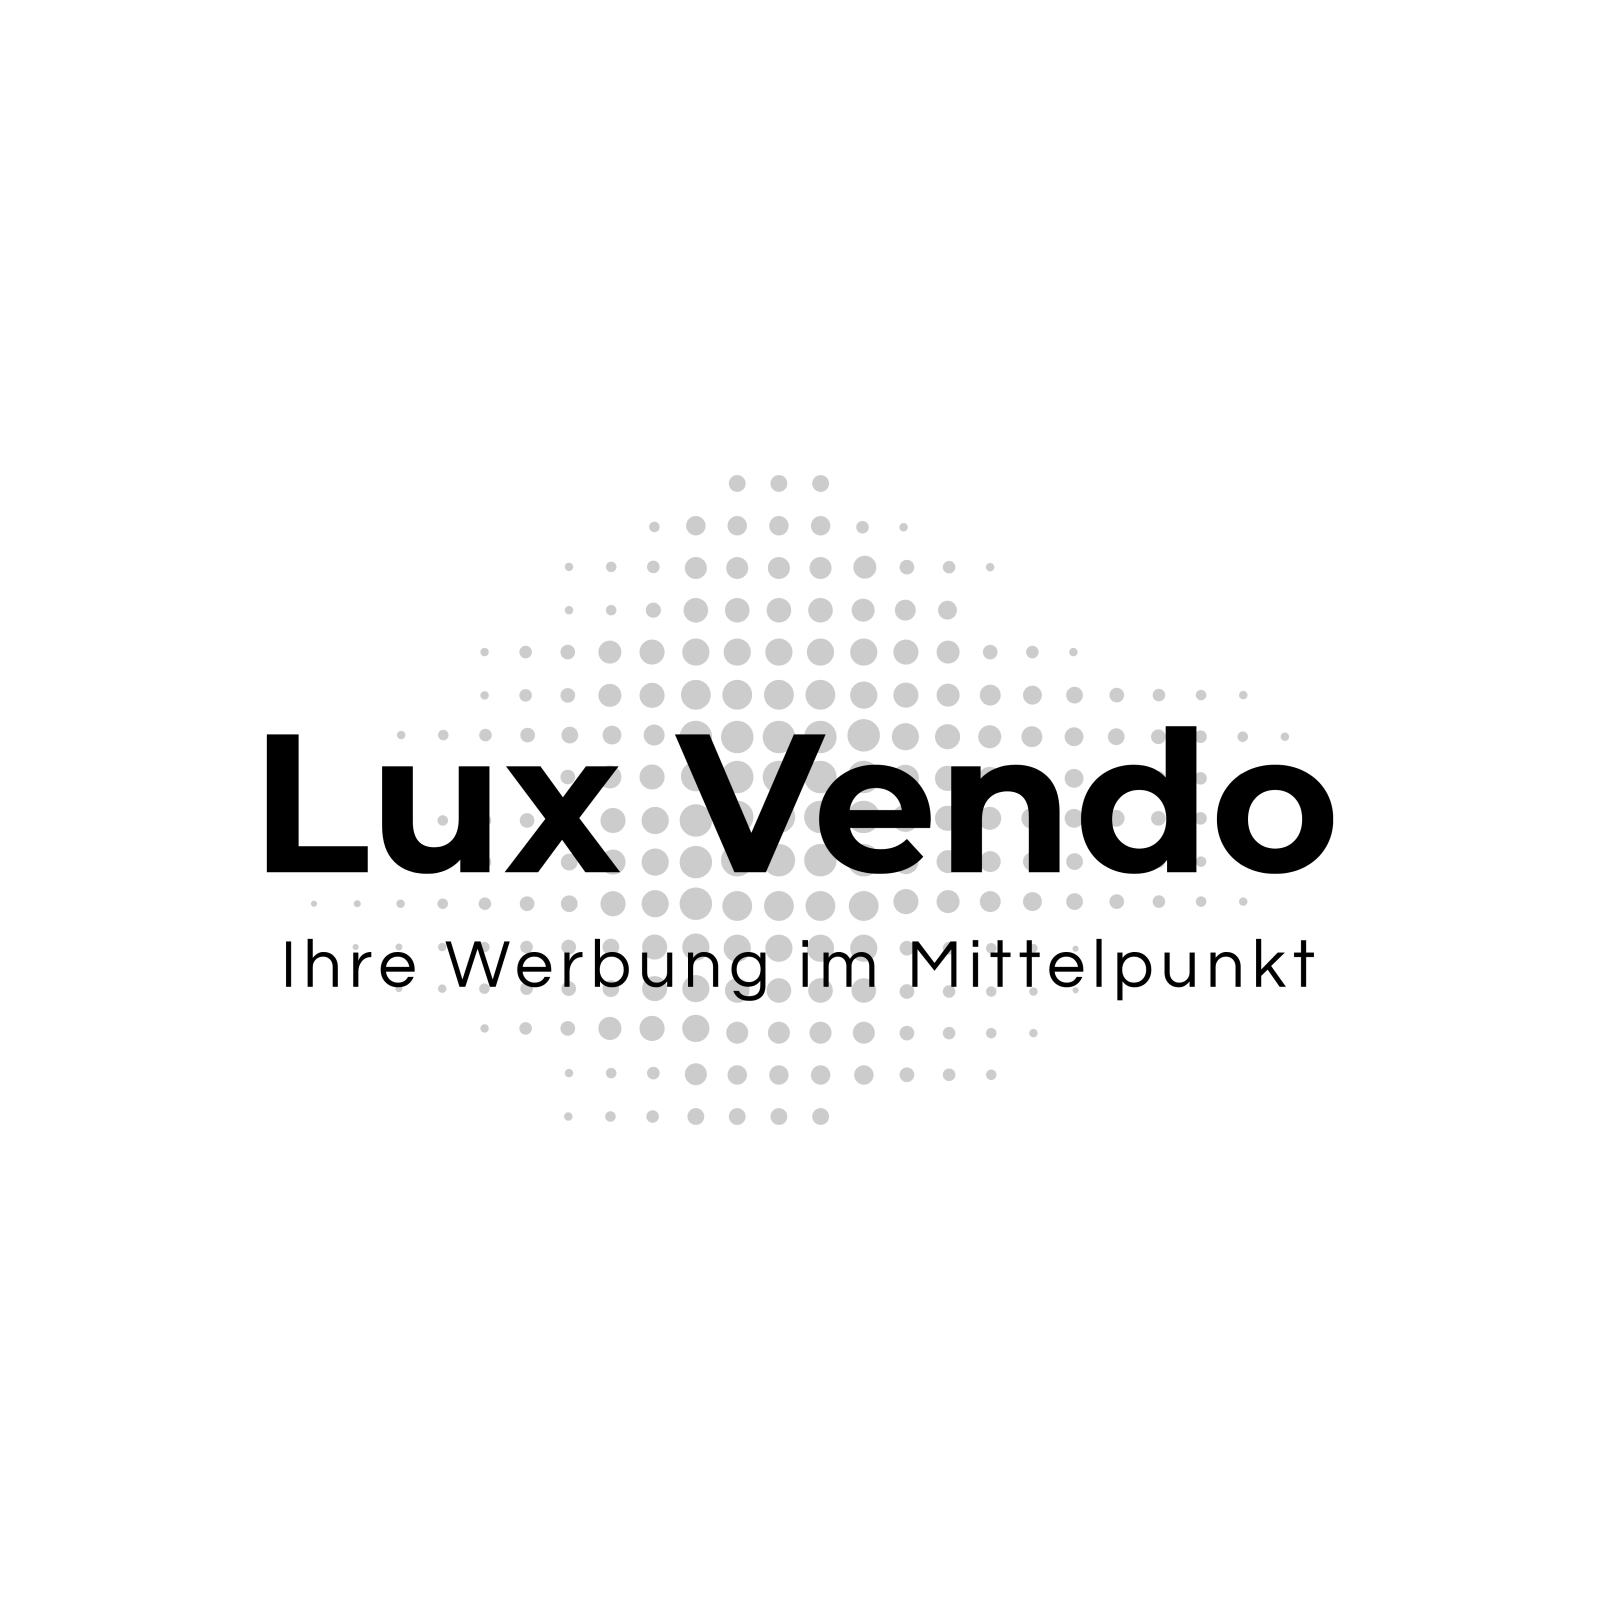 (c) Lux-vendo.de